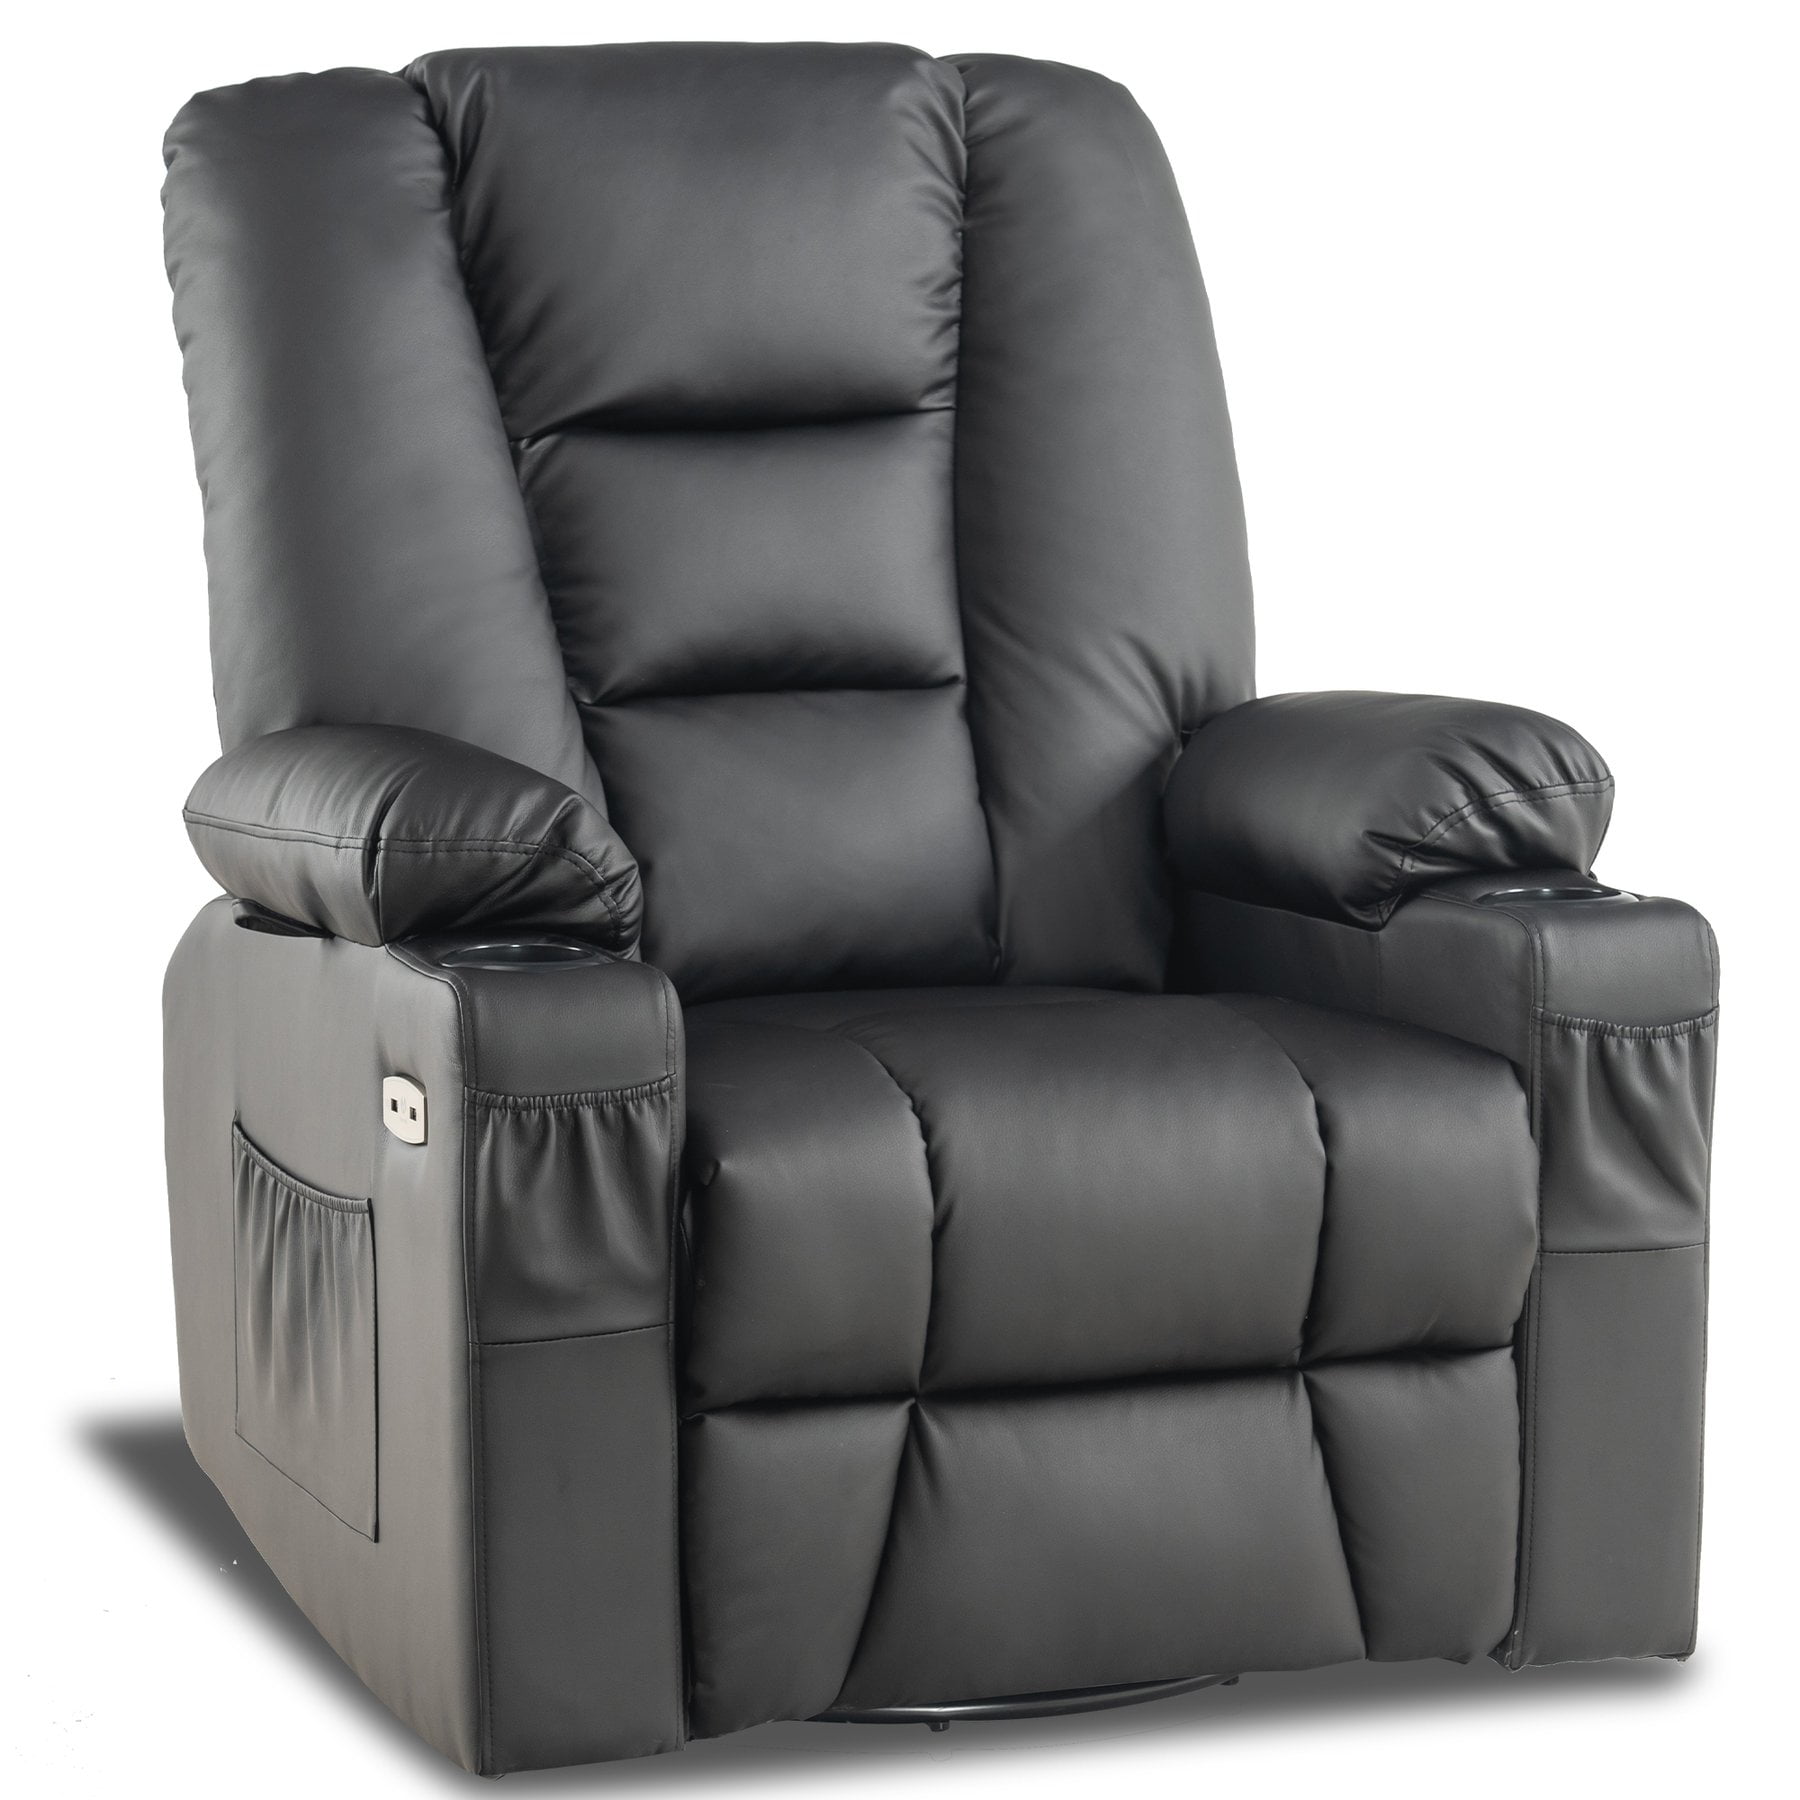 Mcombo Manual Swivel Glider Rocker, Black Leather Swivel Recliner Chair